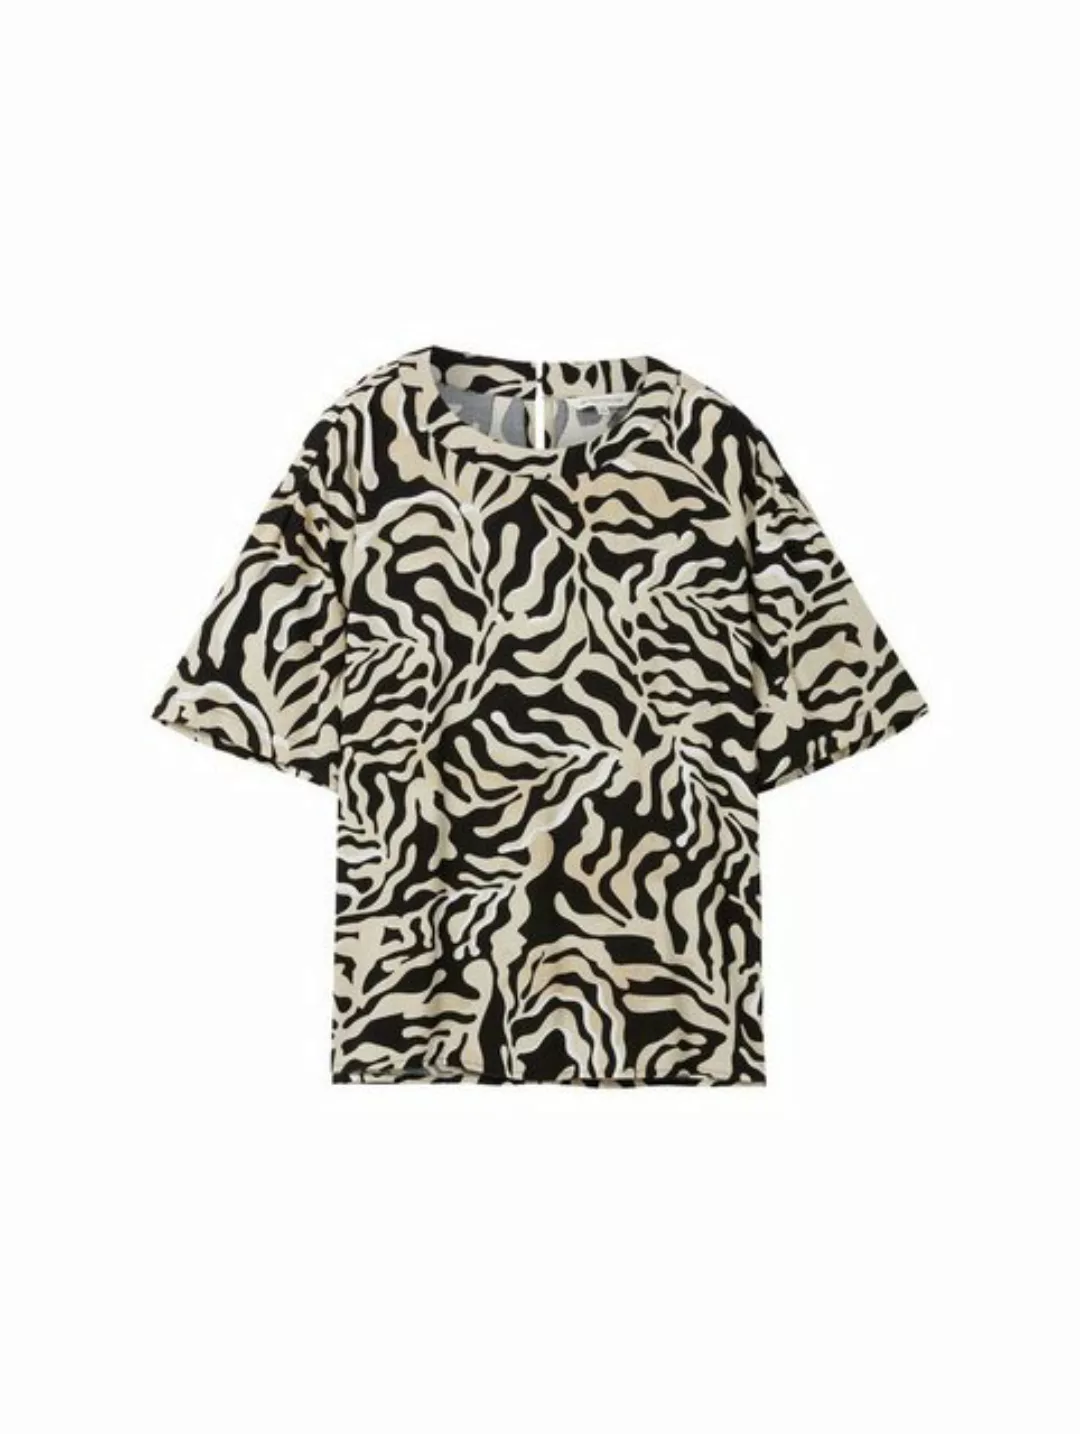 TOM TAILOR Blusenshirt easy shape blouse, black cut palmtree design günstig online kaufen